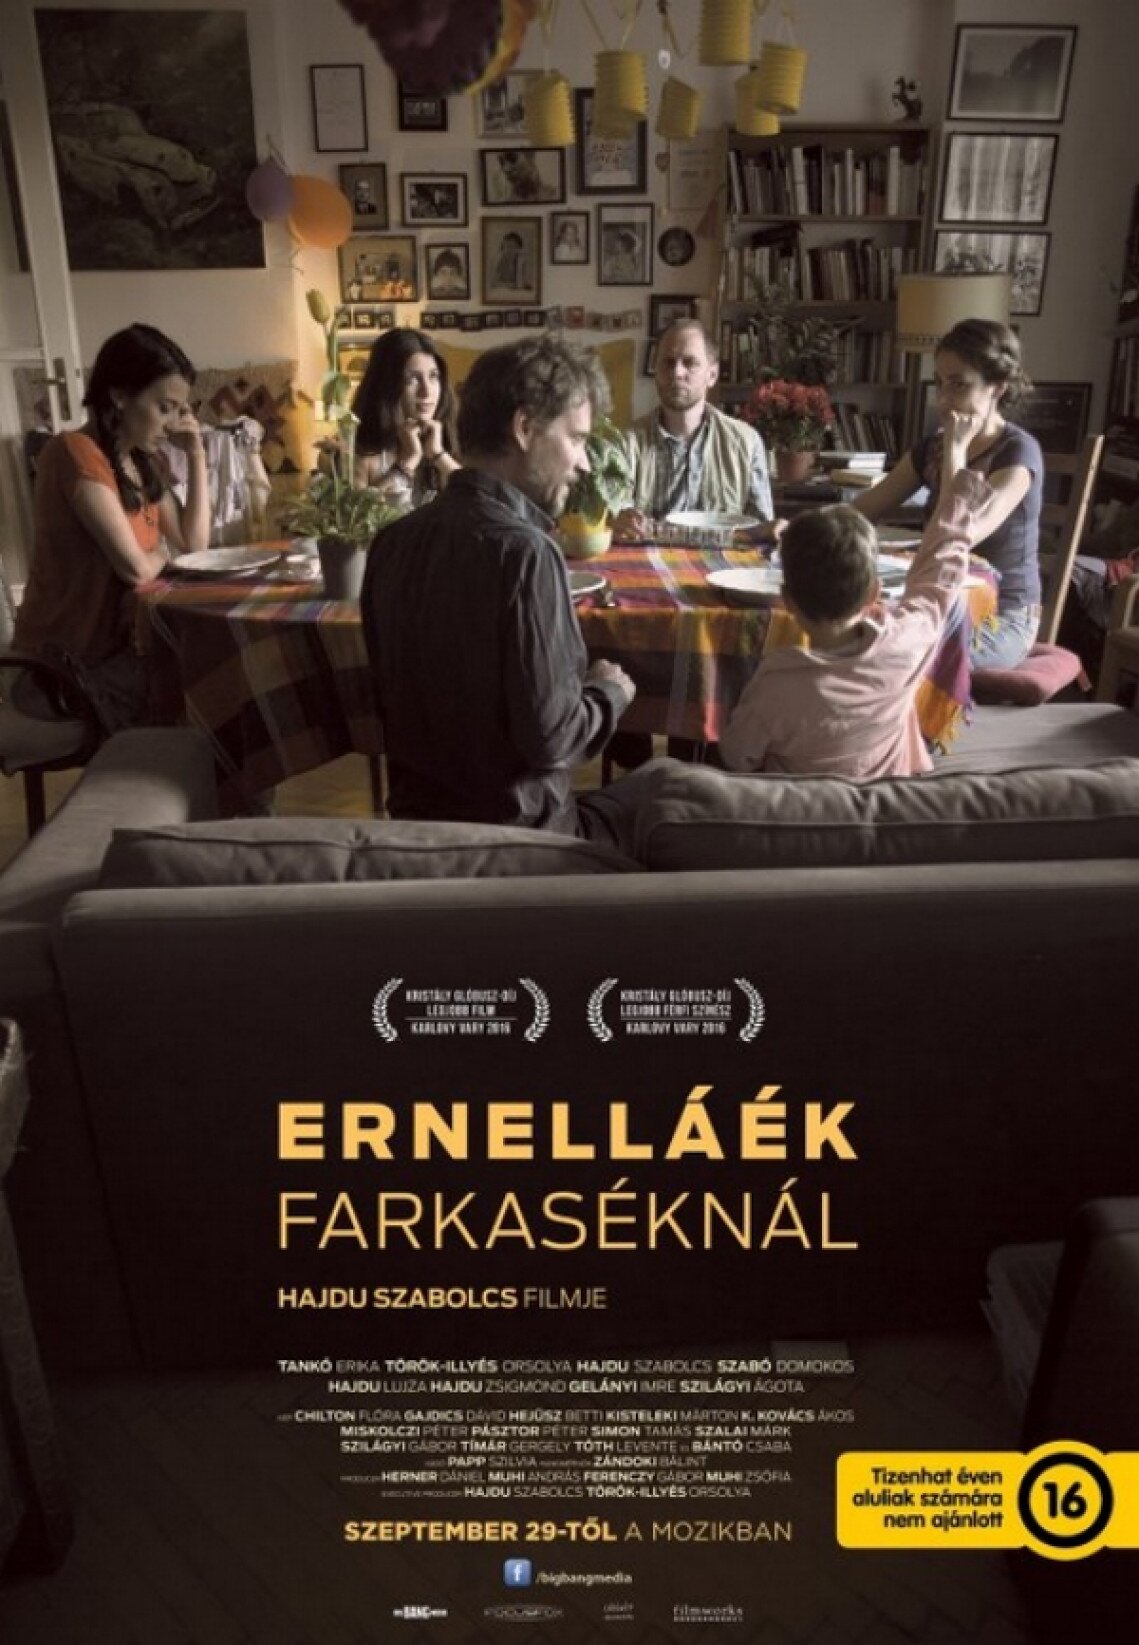 Ernellaek-Farkaseknal_-film-kozonsegtalalkozo-02.jpg